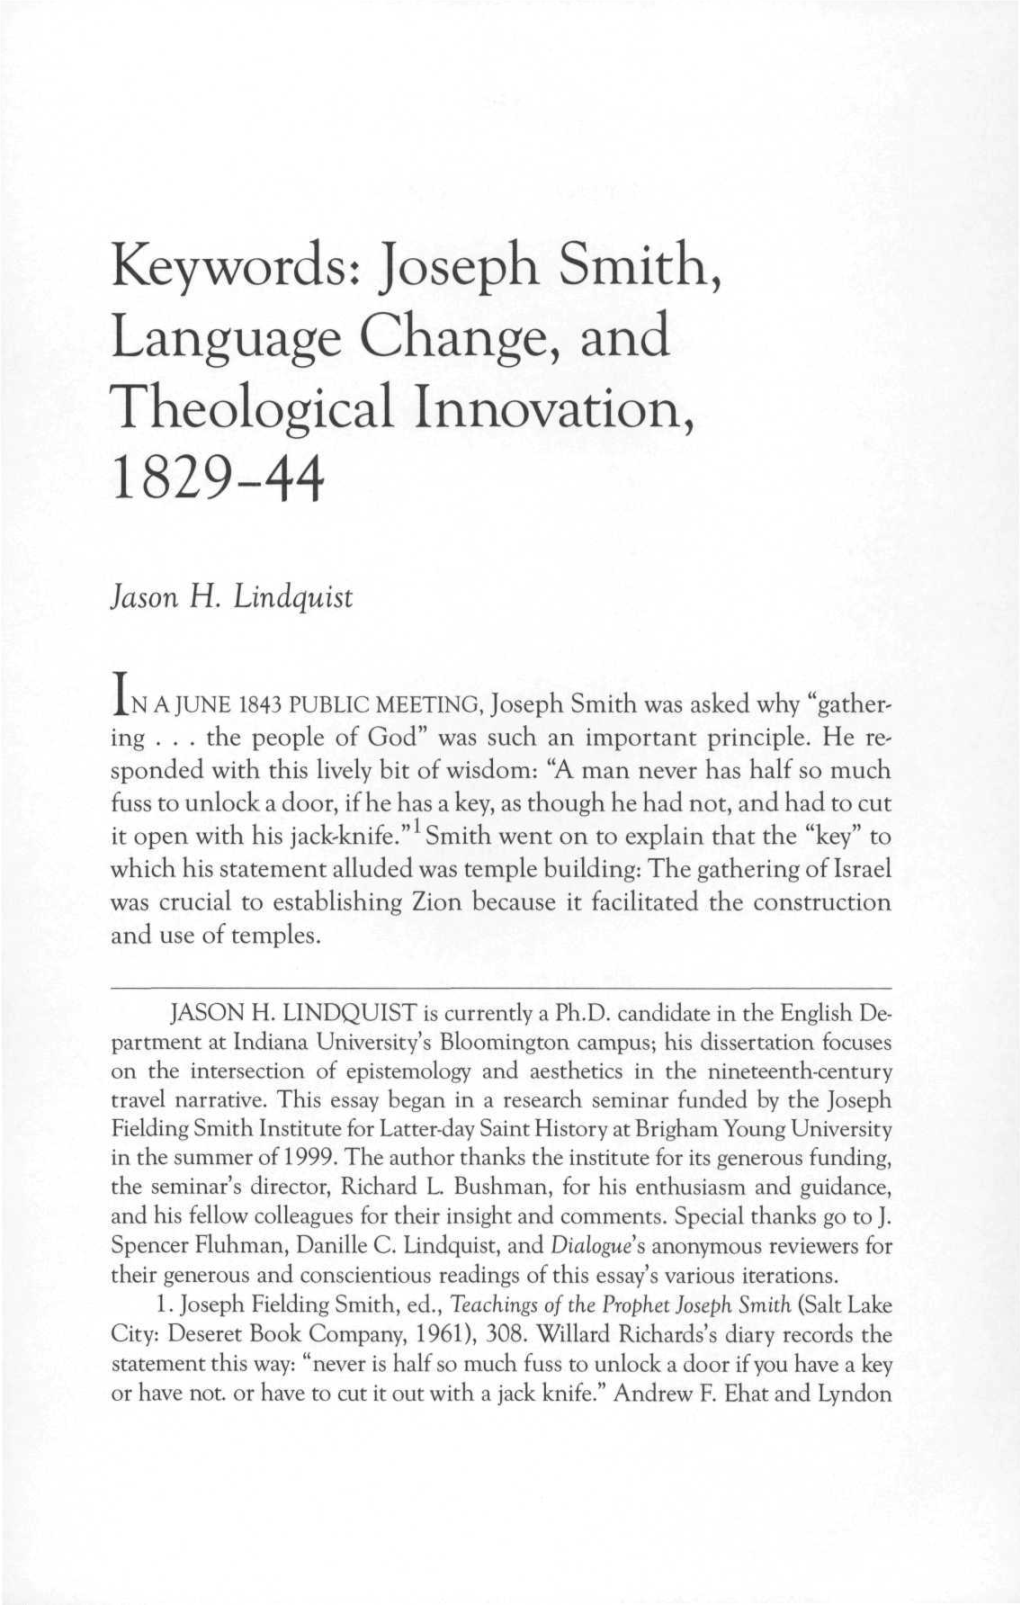 Keywords: Joseph Smith, Language Change, and Theological Innovation, 1829-44